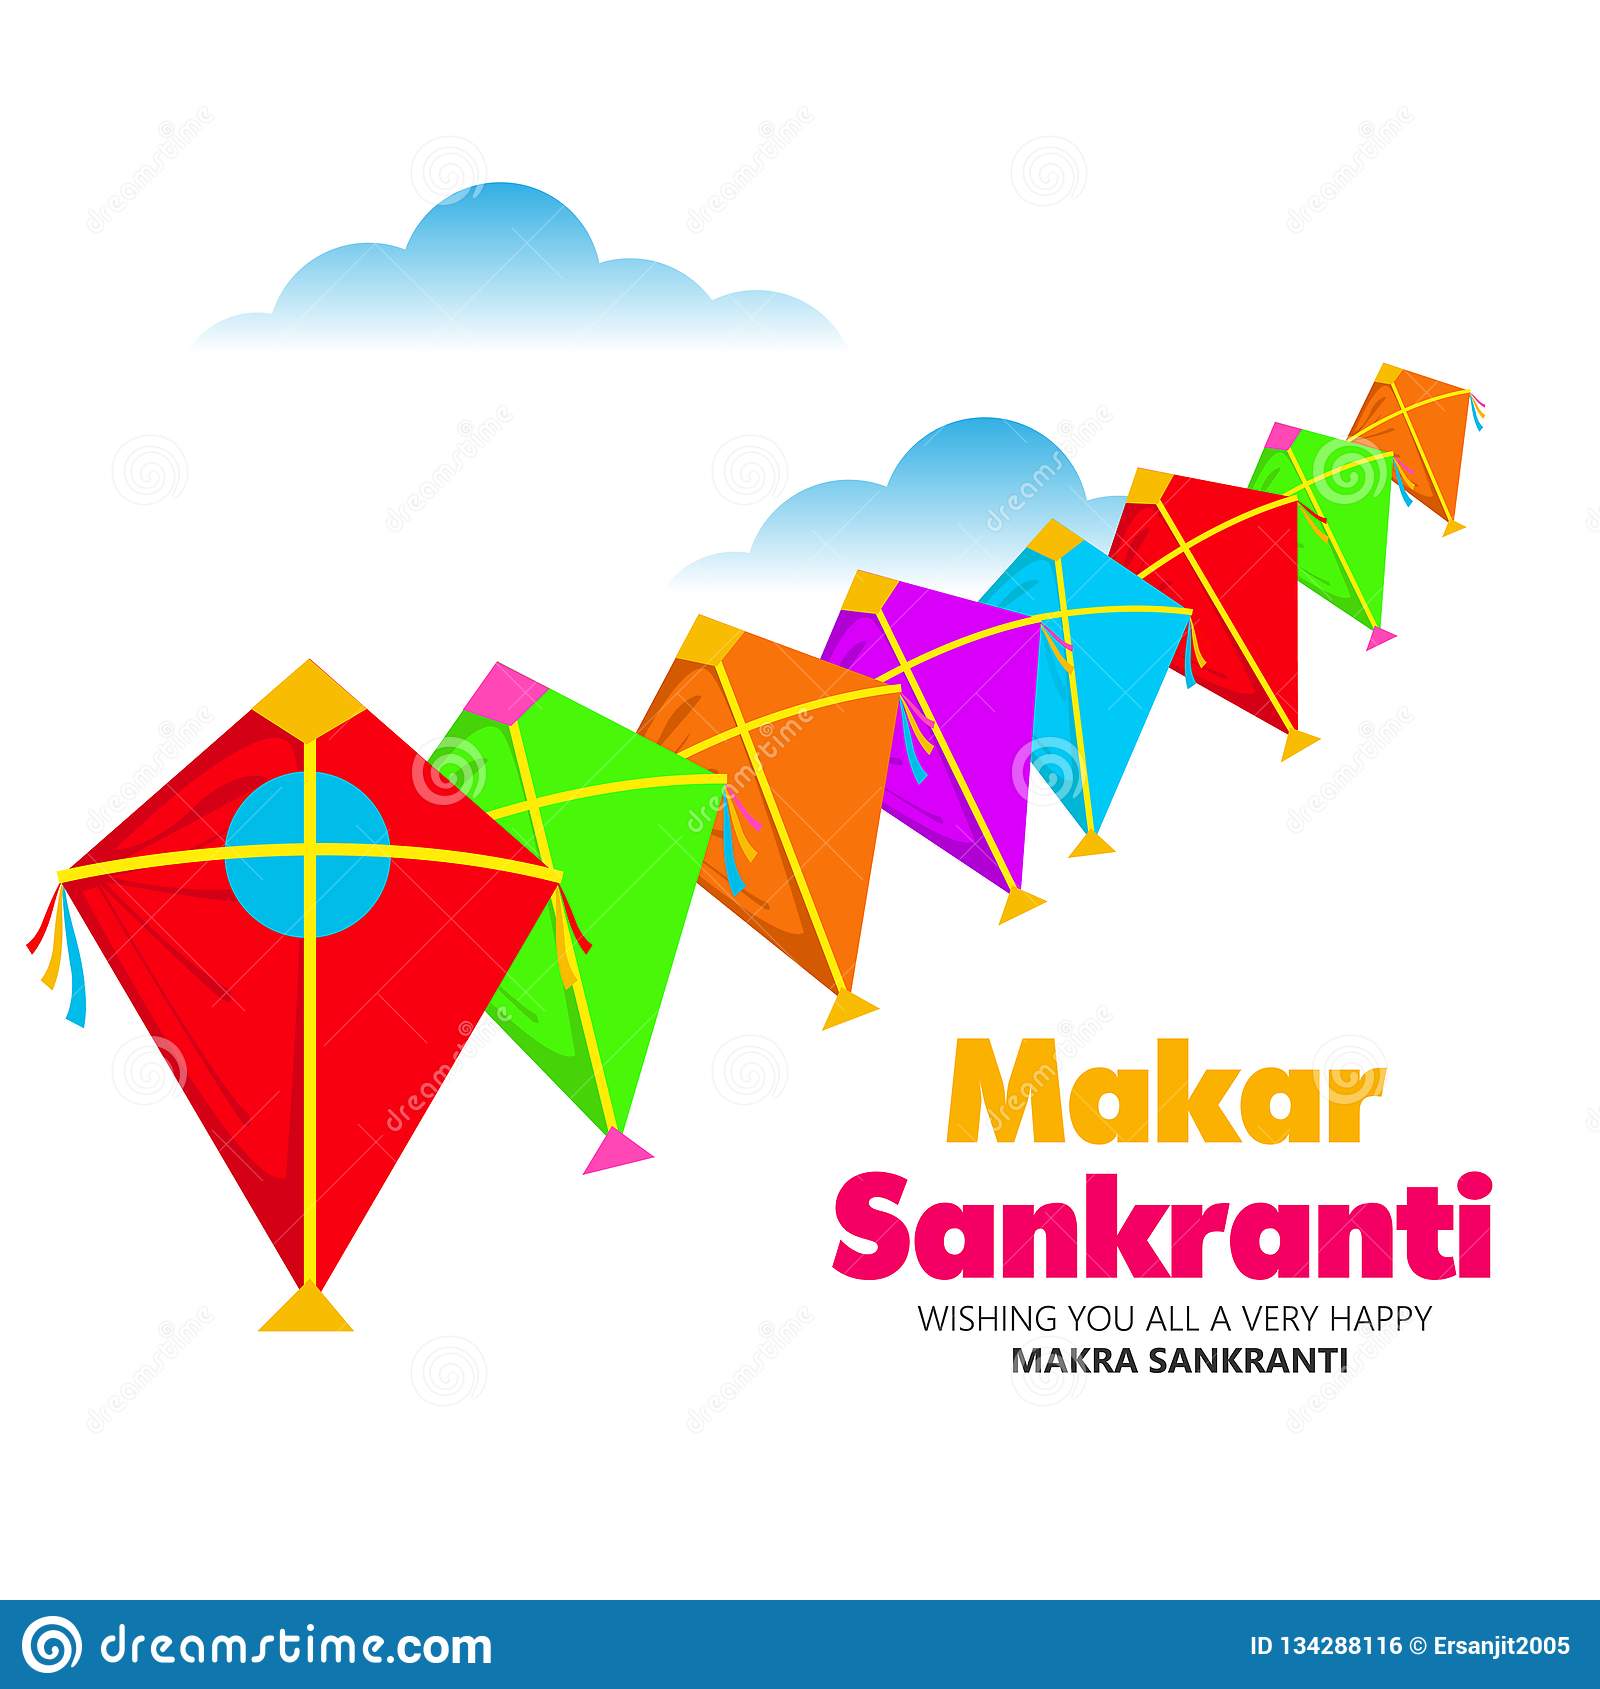 Makar sankranti wallpaper with colorful kite for festival of india stock vector